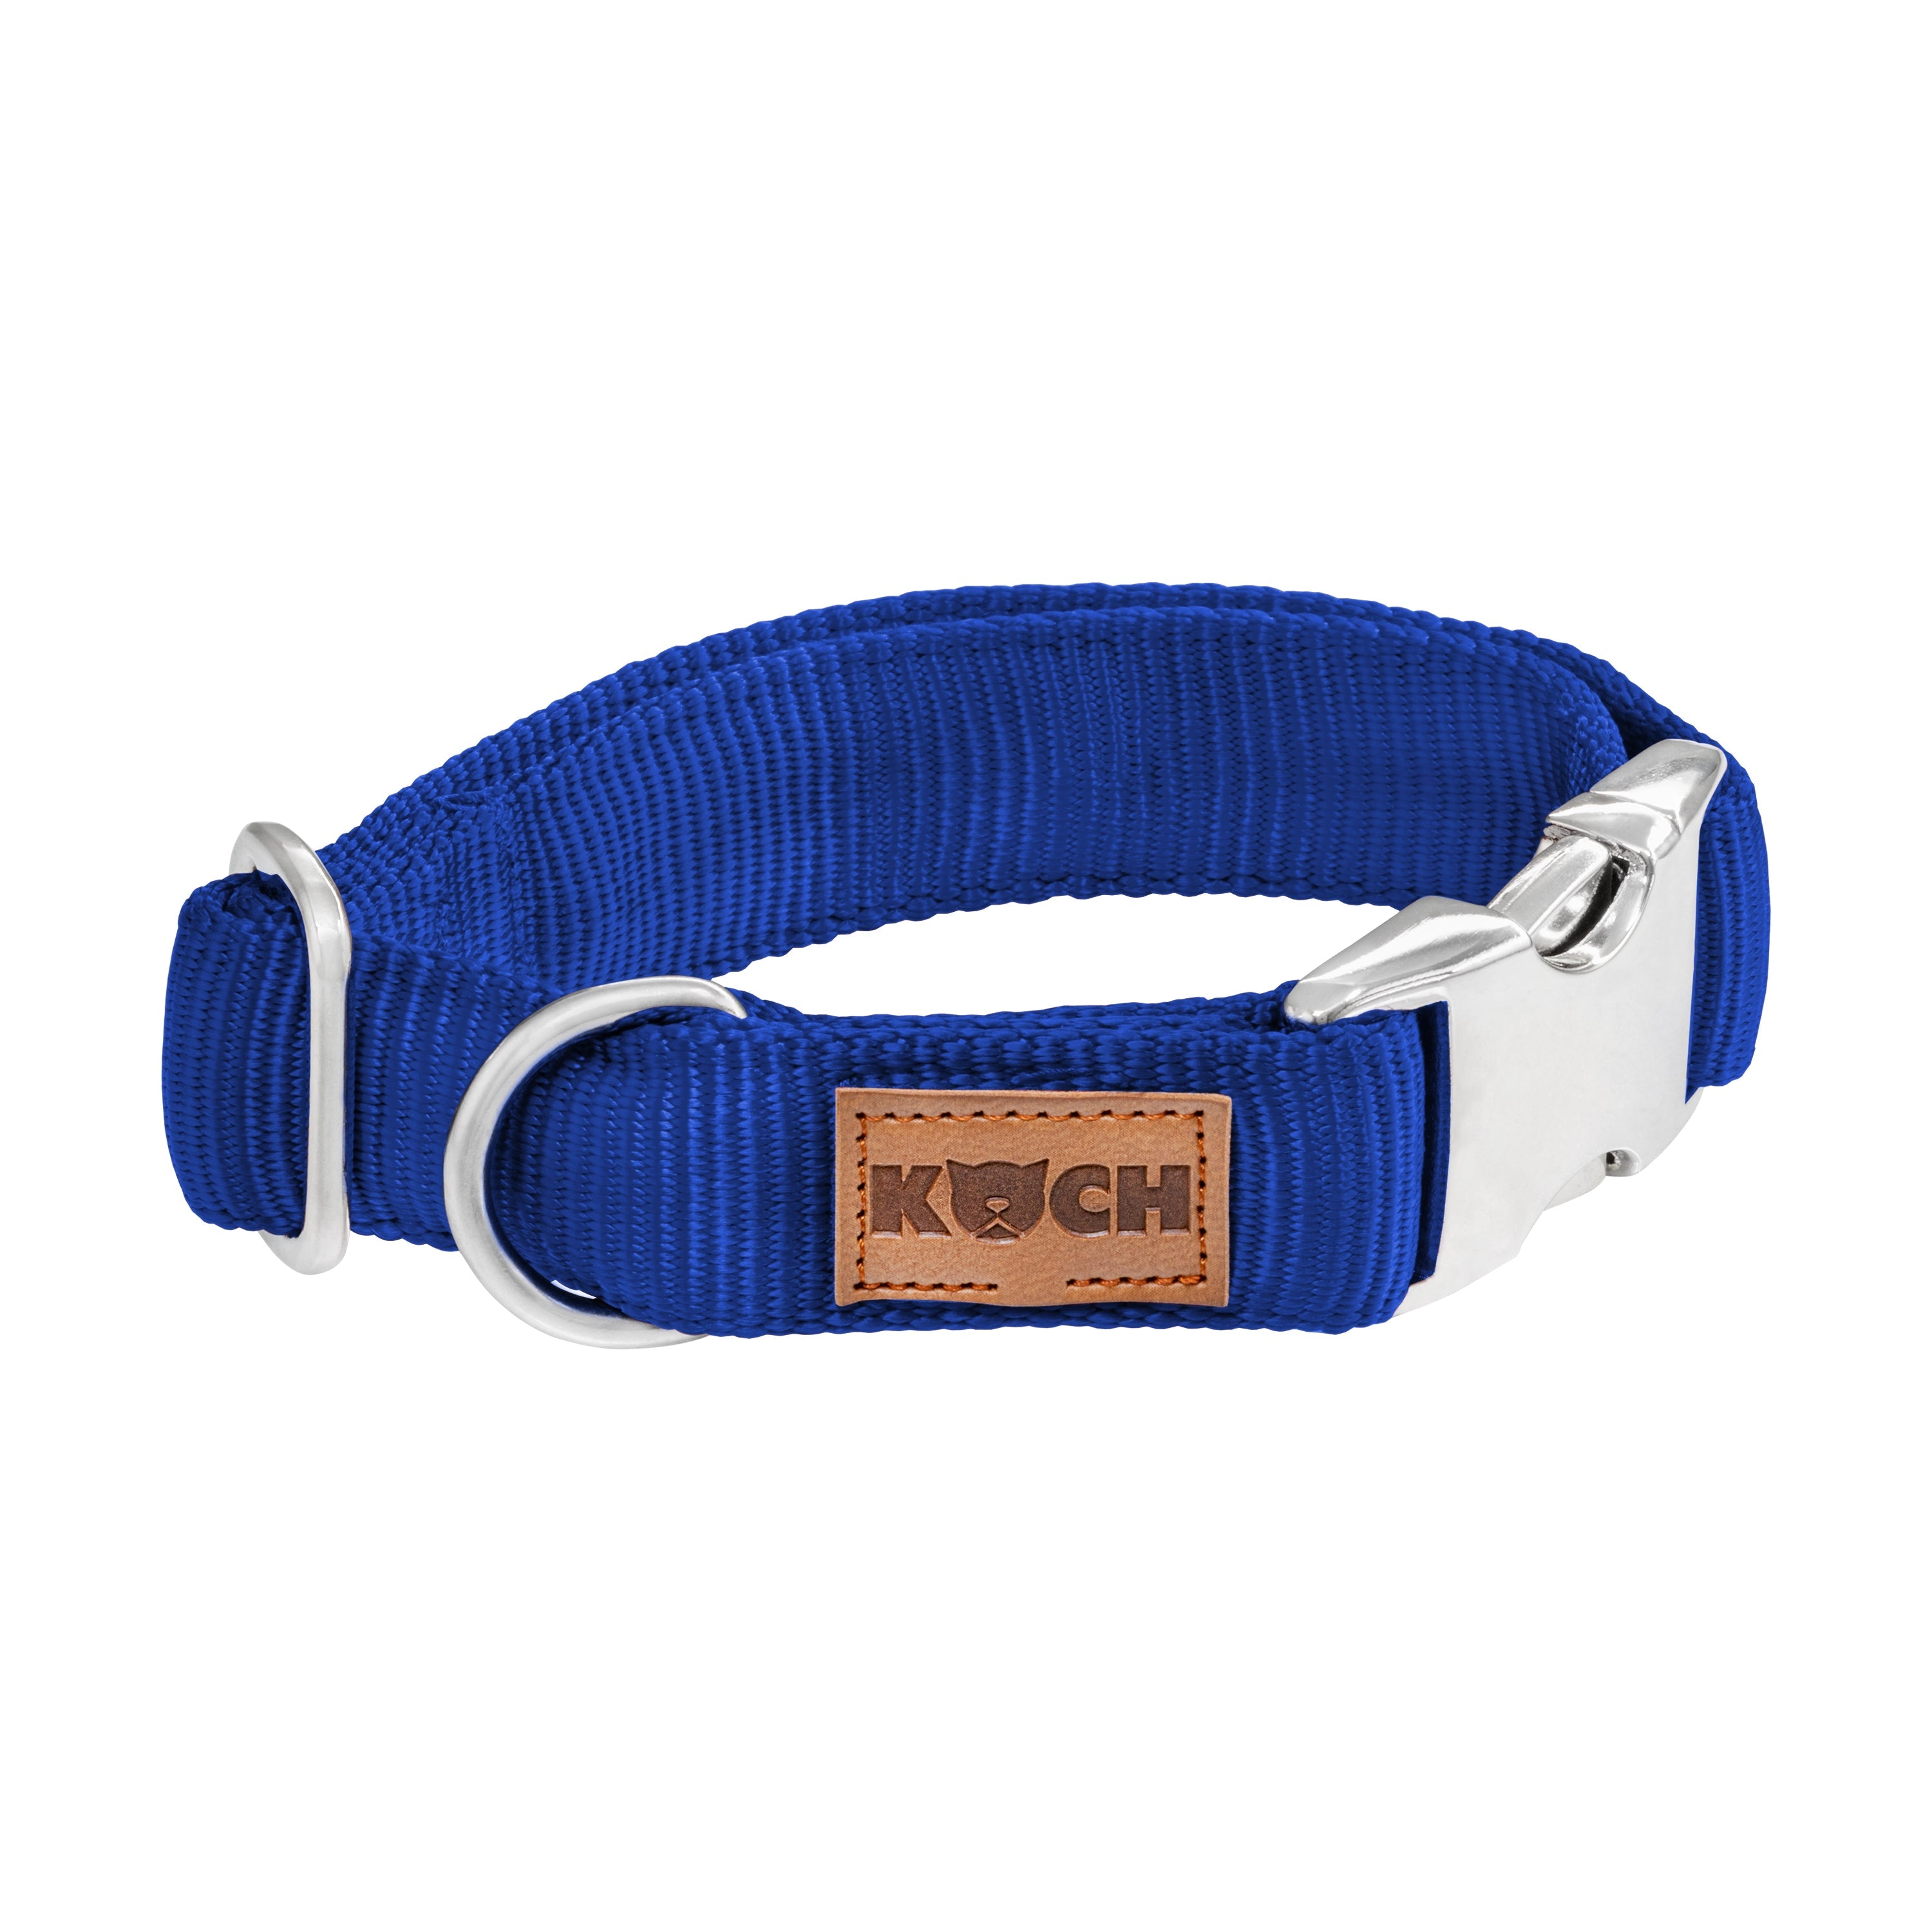 KOCH Premium Alu-Klick Hundehalsband gepolstert blau #farbe_blau